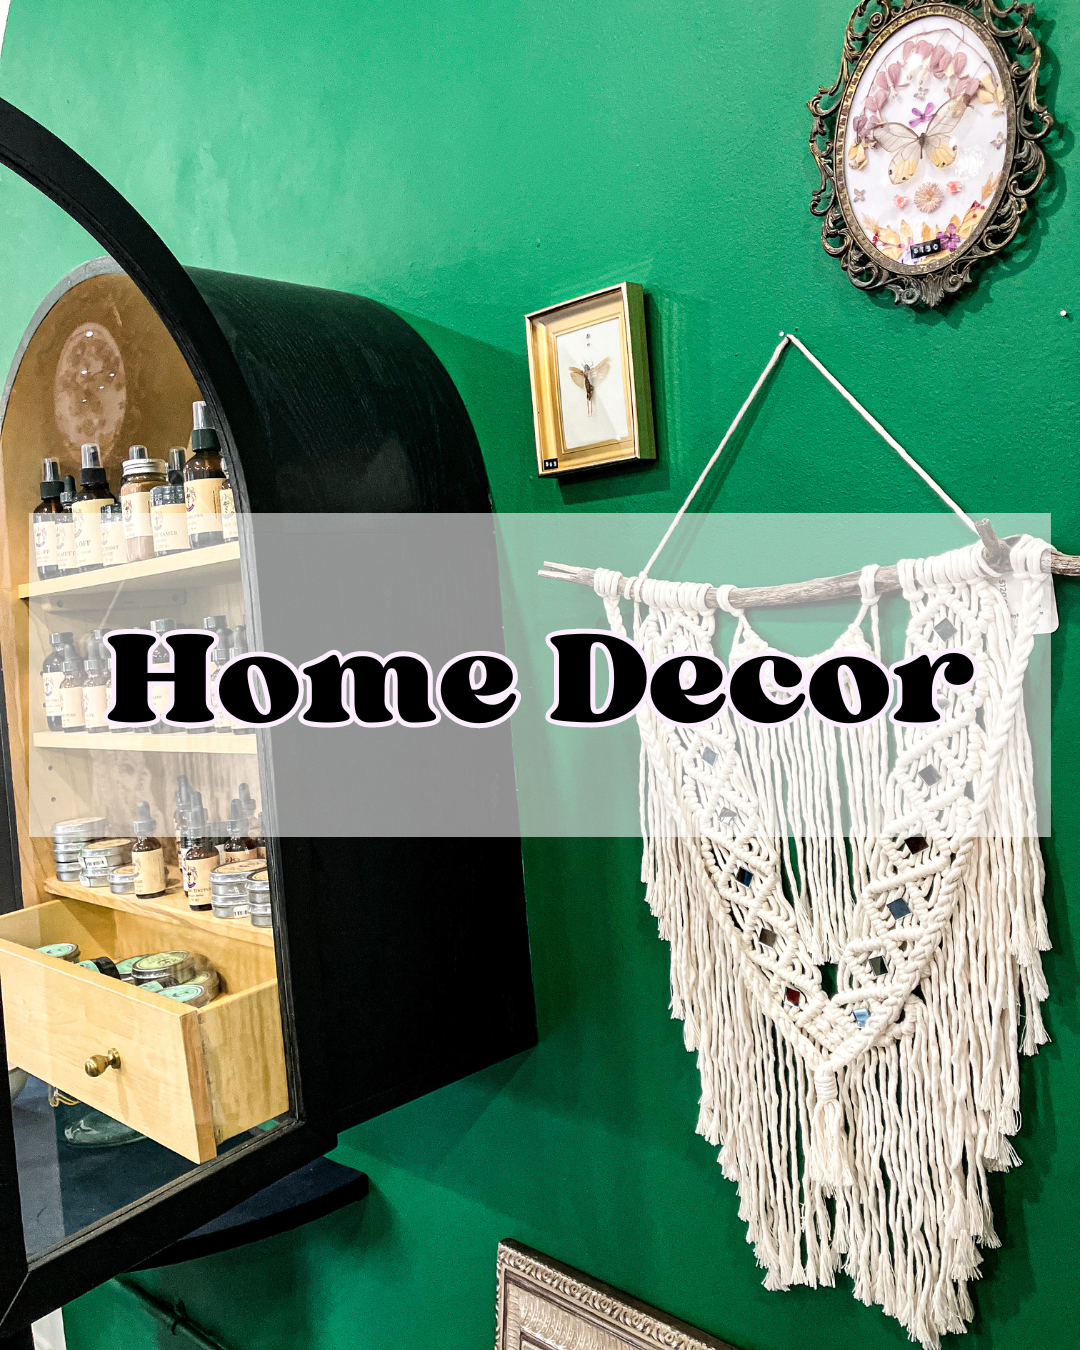 Handmade Home Decor | in Harrisburg PA